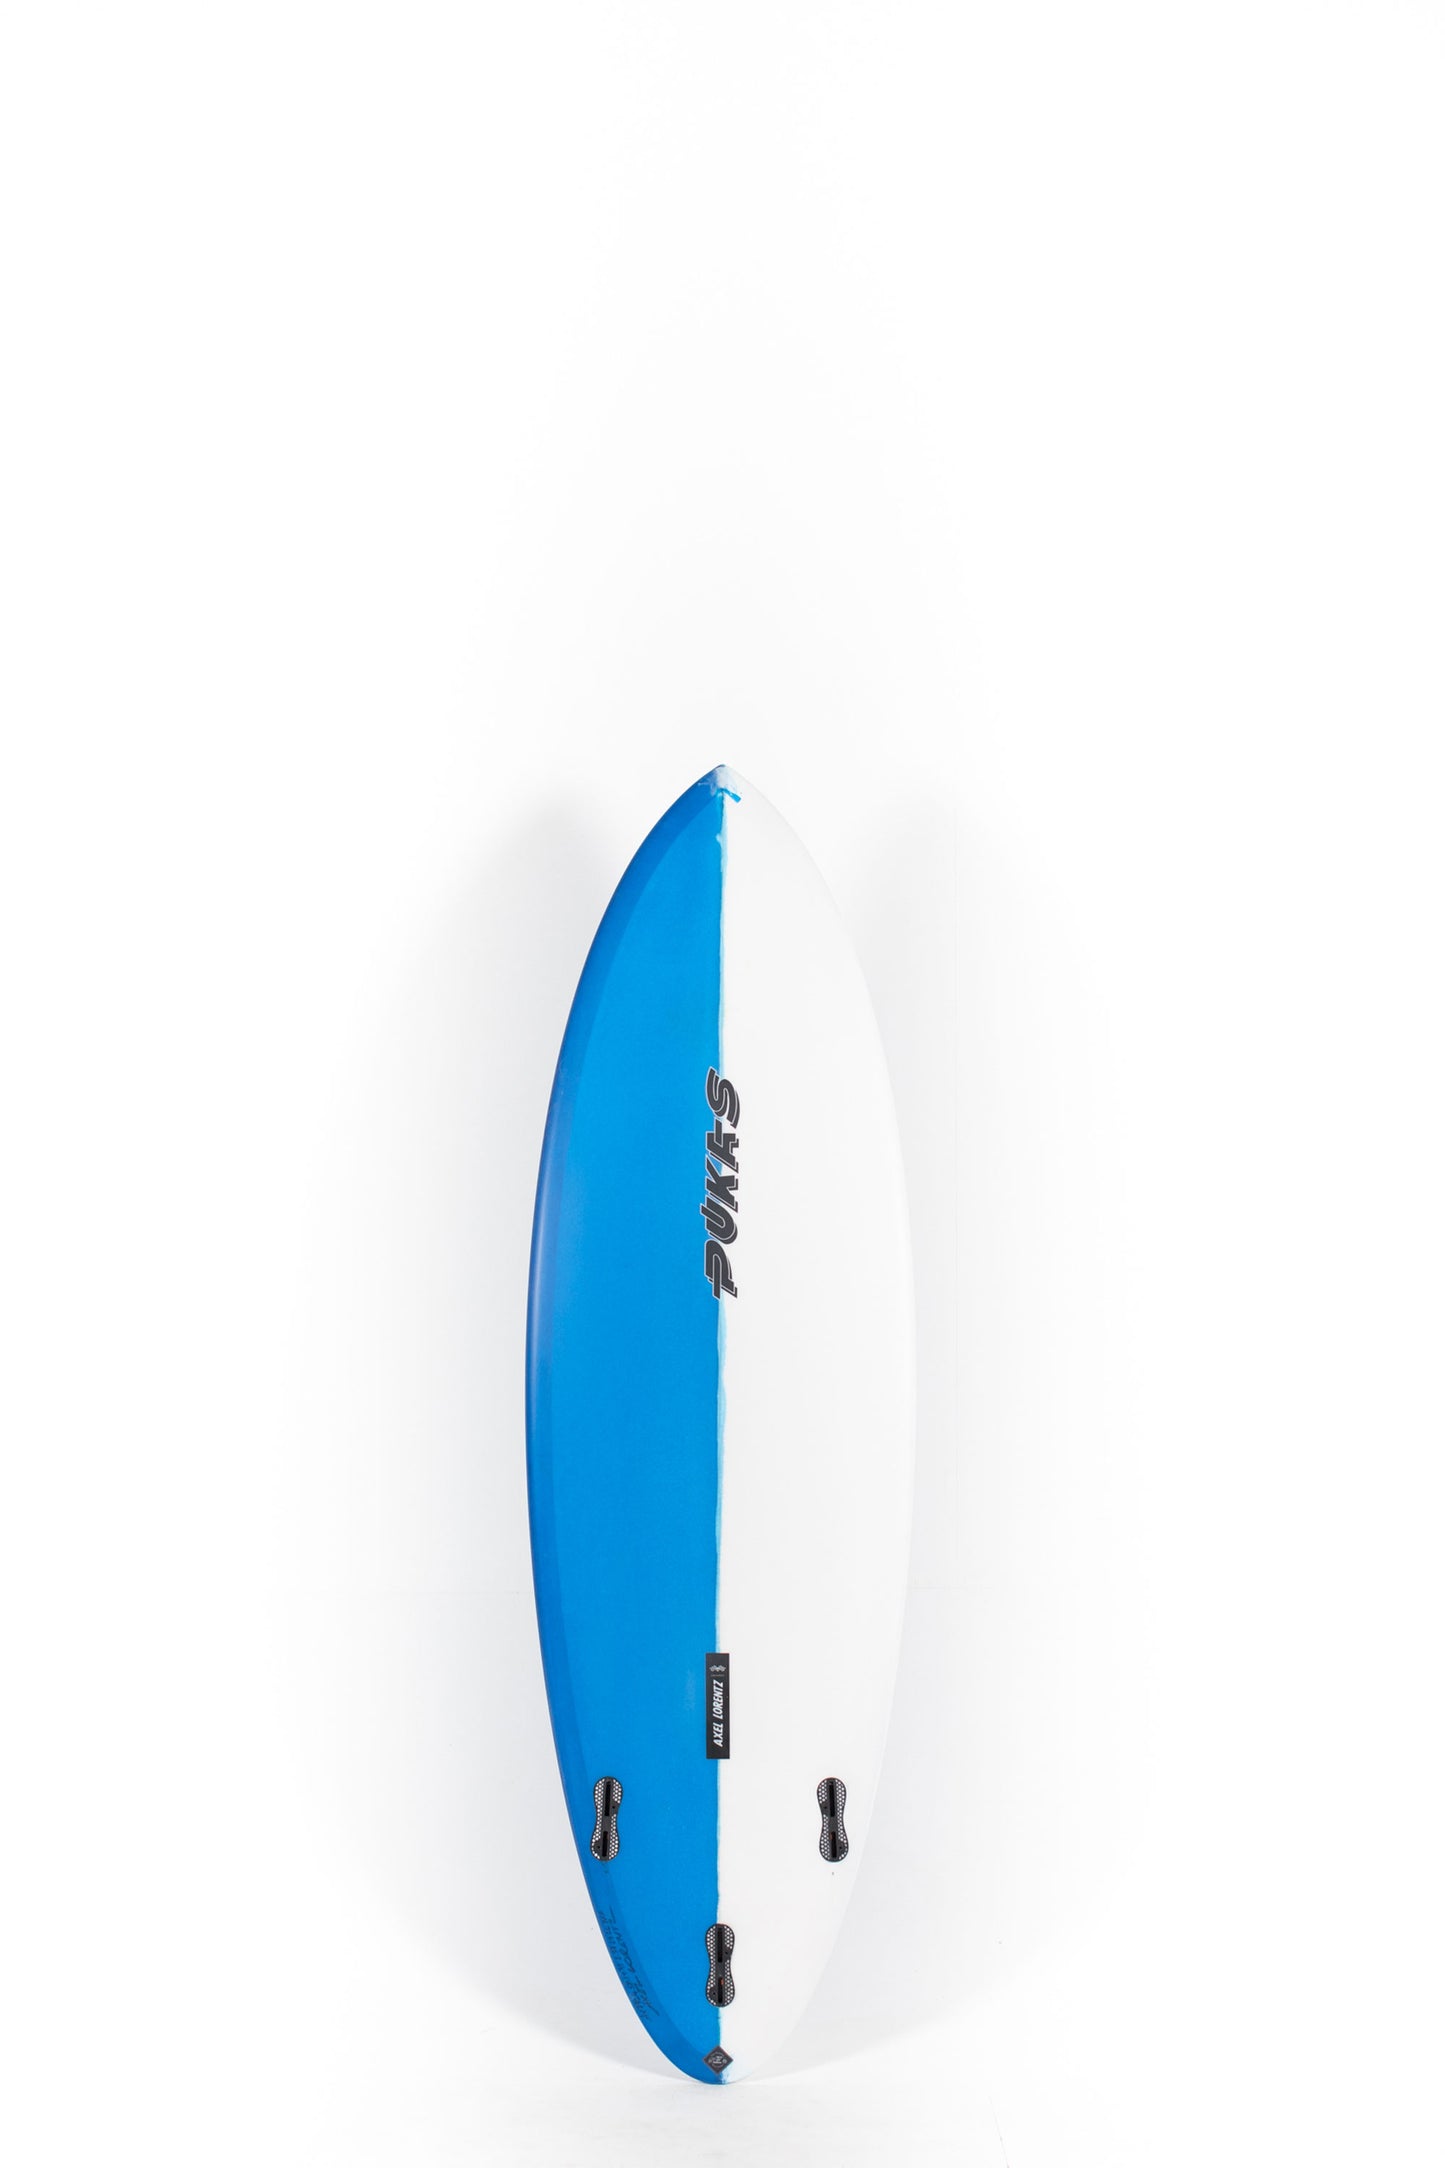 Pukas Surf Shop - Pukas Surfboard - ORIGINAL 69 by Axel Lorentz - 5’8” x 19,75 x 2,37 - 29,2L - AX07924